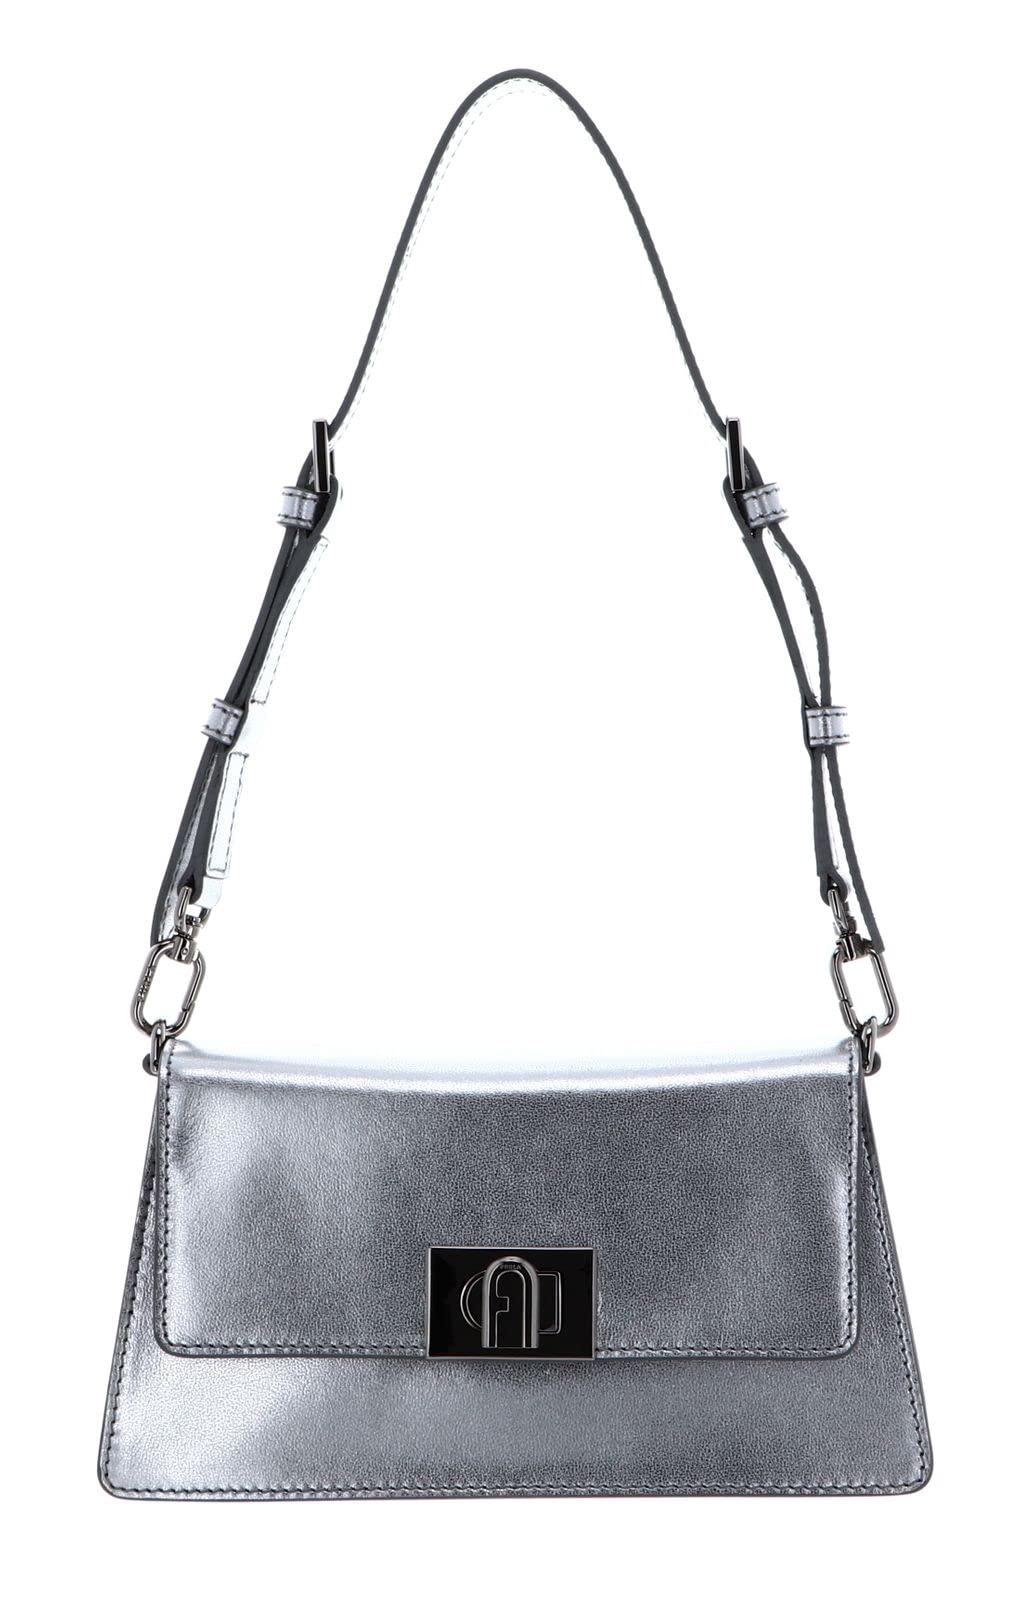 Furla Women's Zoe Silver Leather Shoulder Handbag